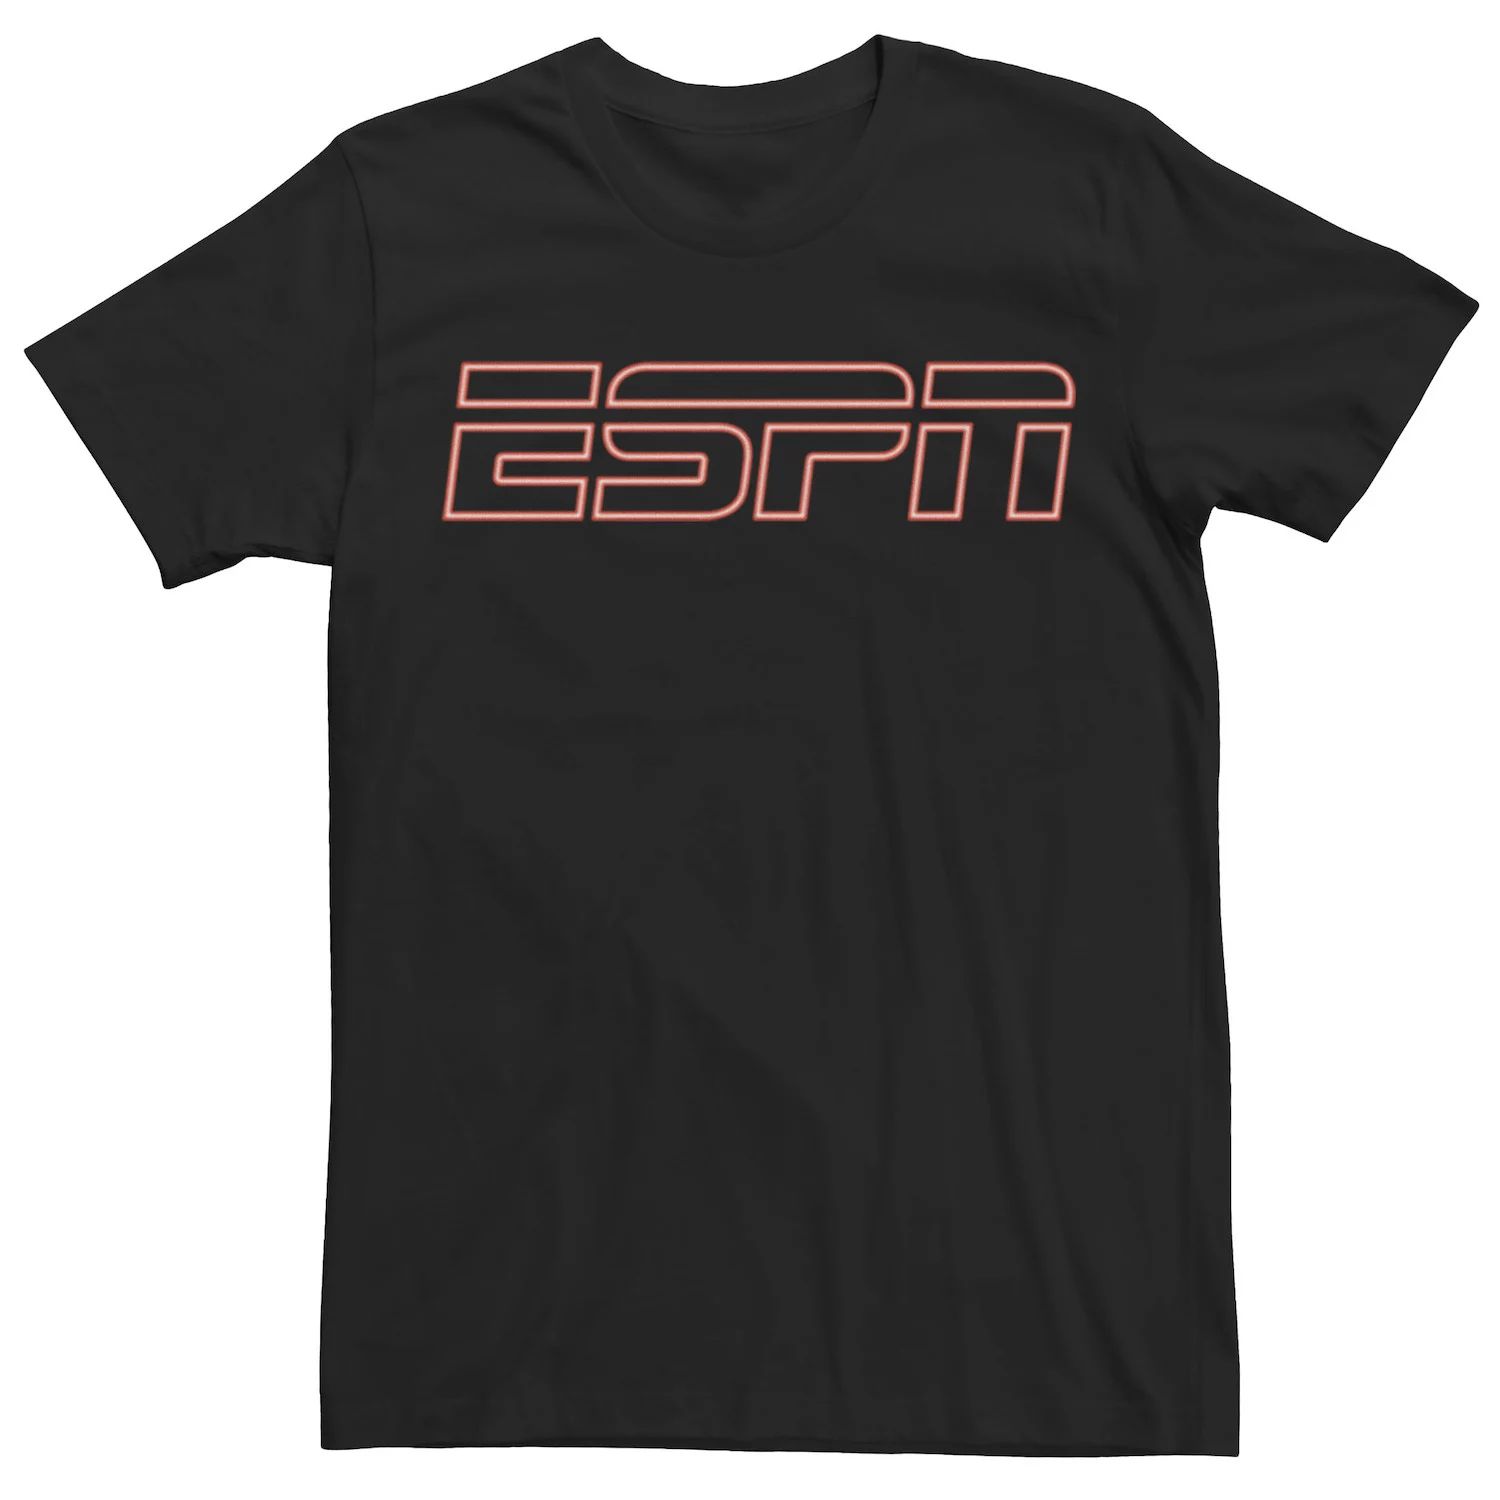 Мужская футболка с неоновым логотипом ESPN Licensed Character мужская футболка death before decaf с неоновым скелетом licensed character